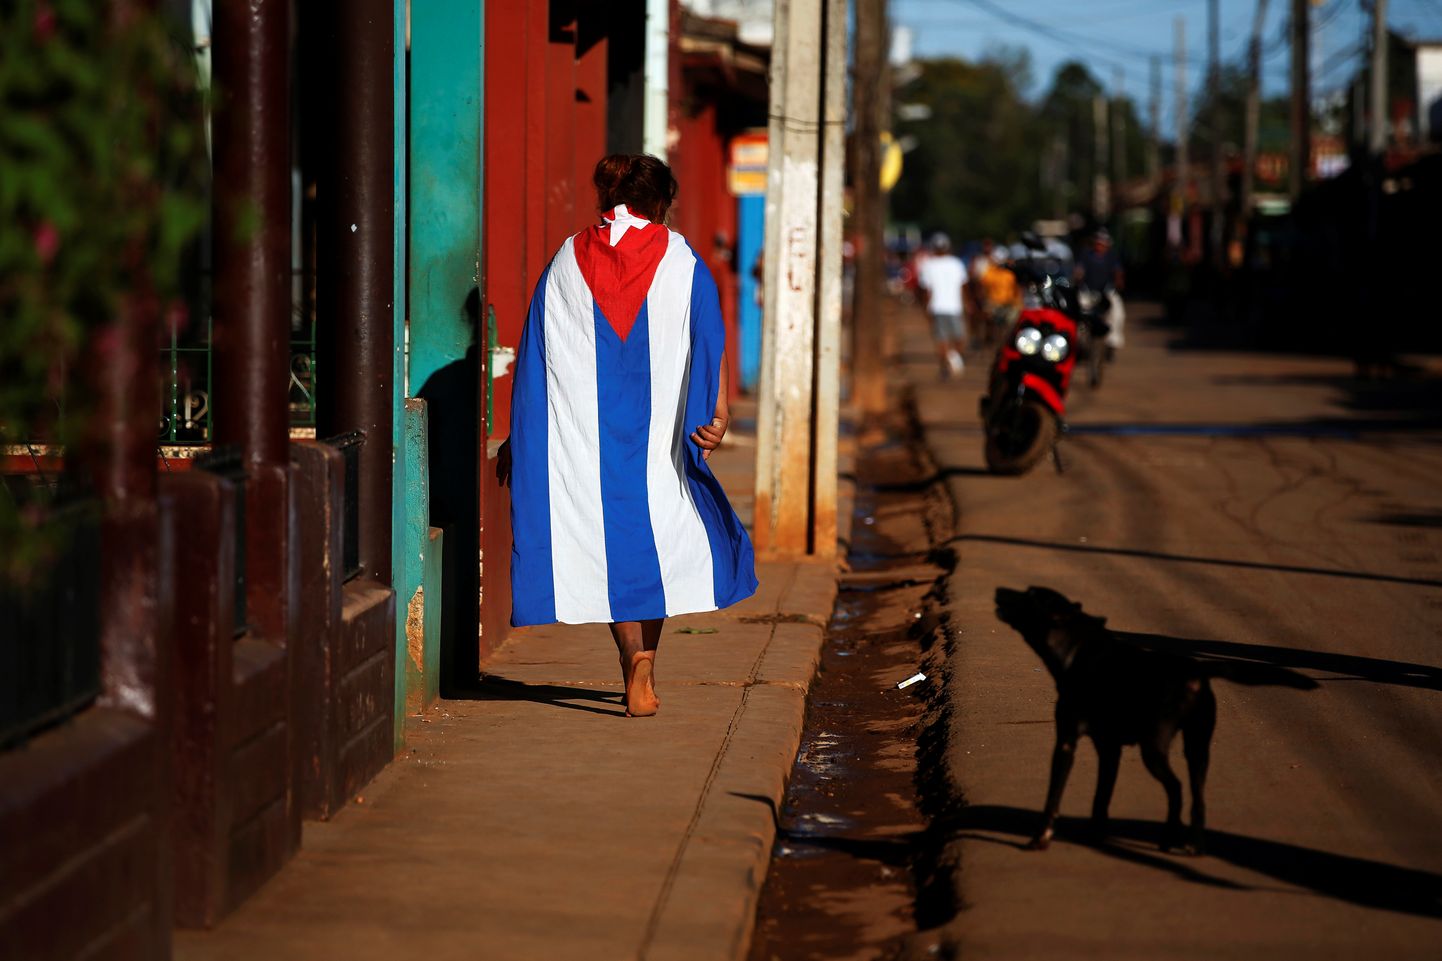 Koer haukumas Kuuba lippu kandva mehe peale.